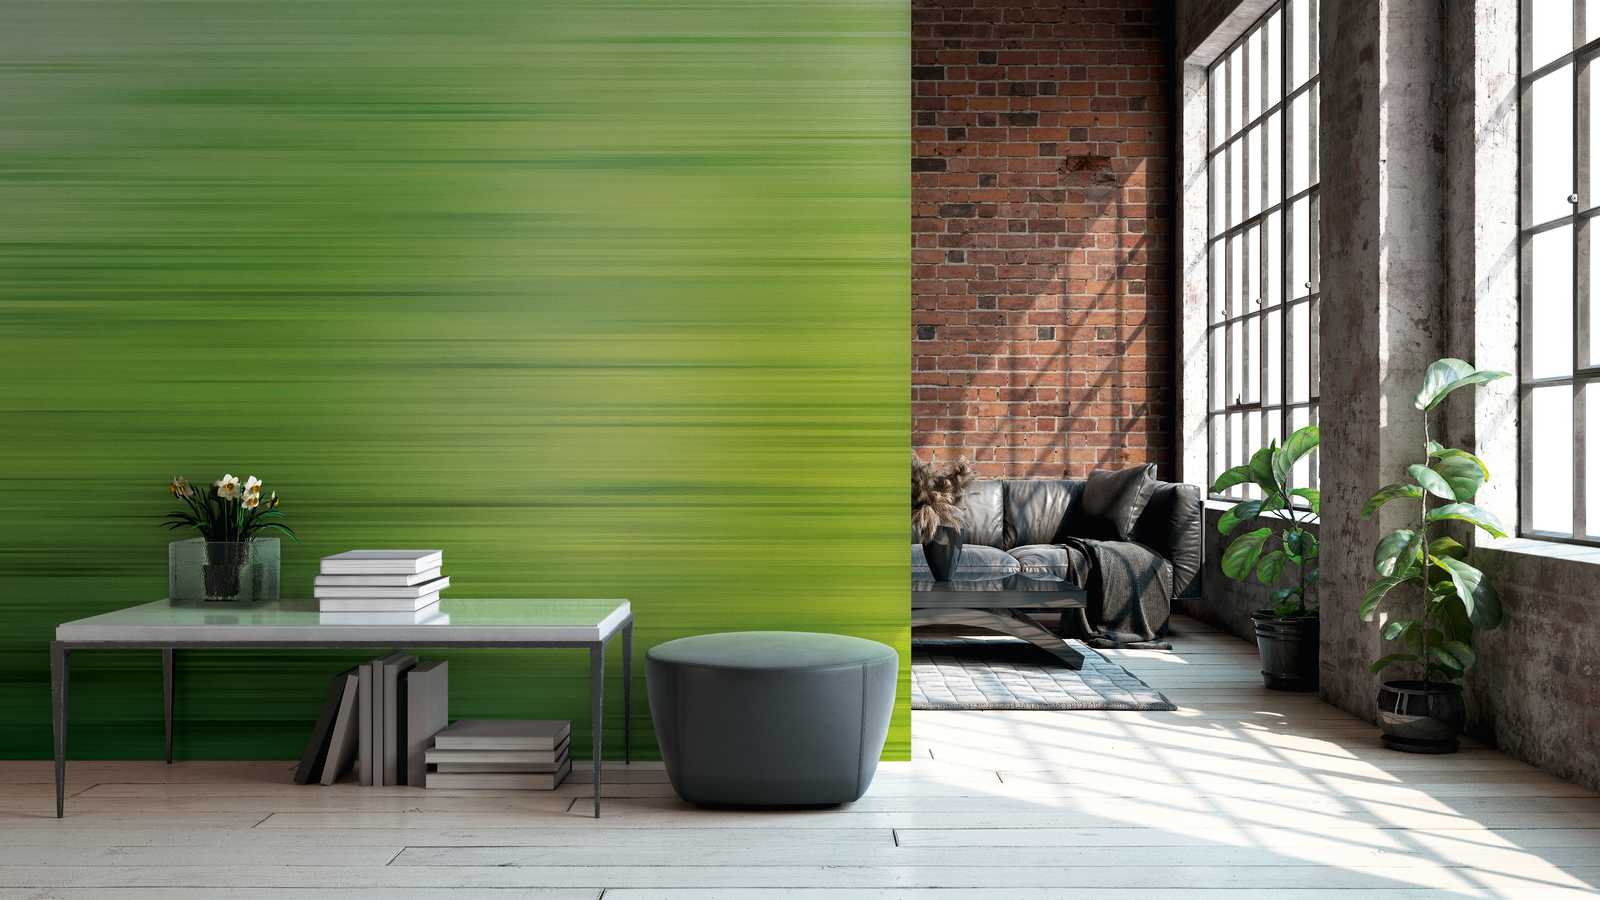             Tapeten Neuheit – Grüne Motivtapete mit Farbverlauf Design
        